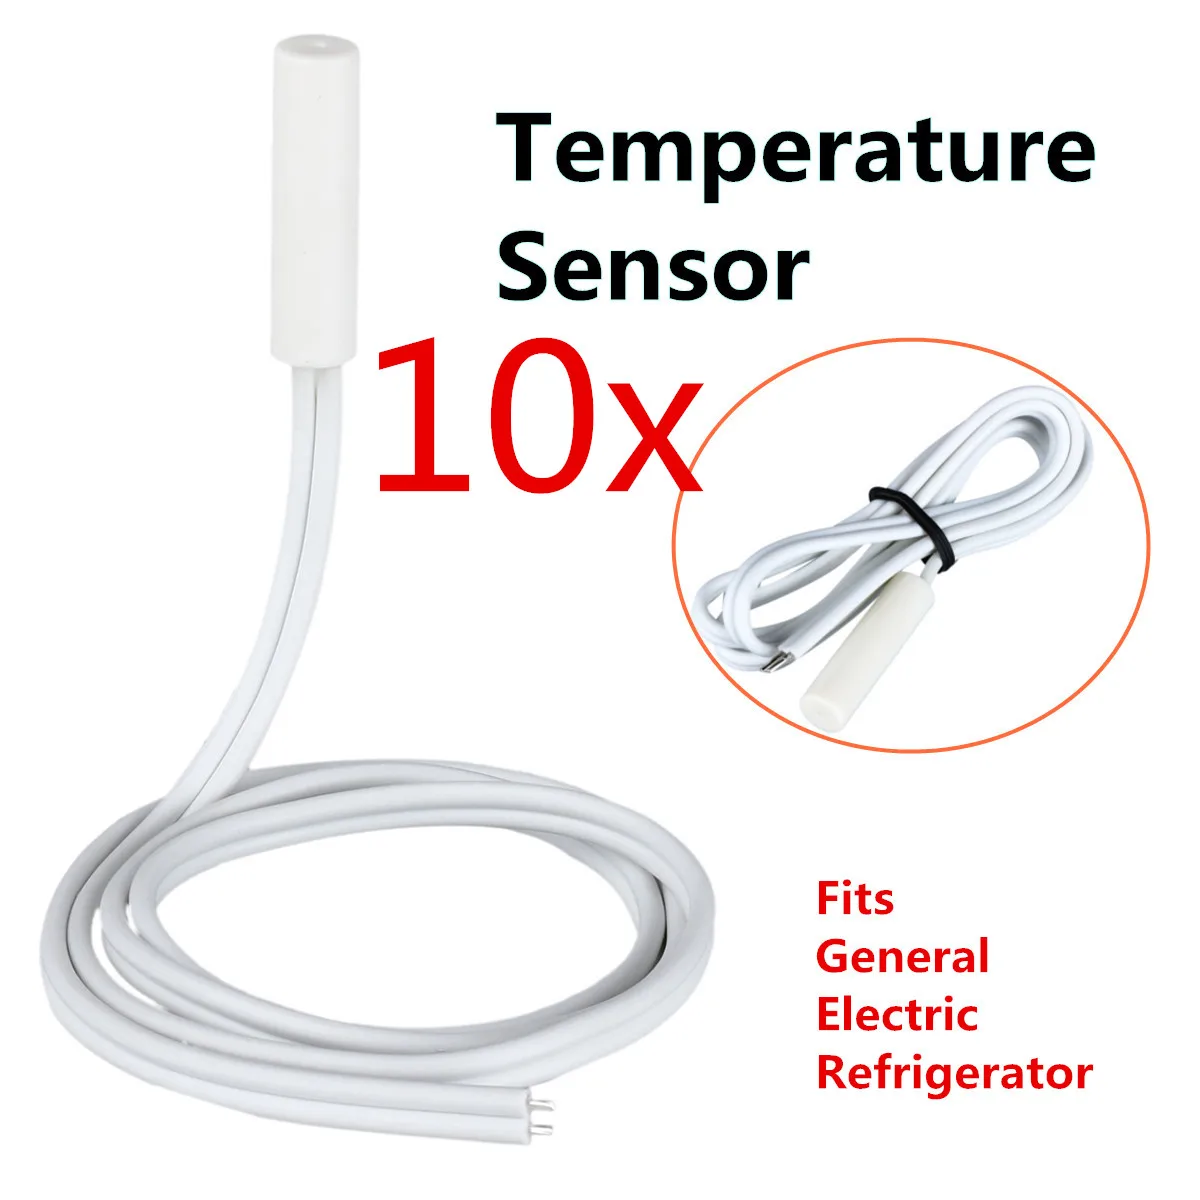 10 шт. Температура Сенсор подходит для General Electric Kenmore Hotpoint холодильник WR55X10025